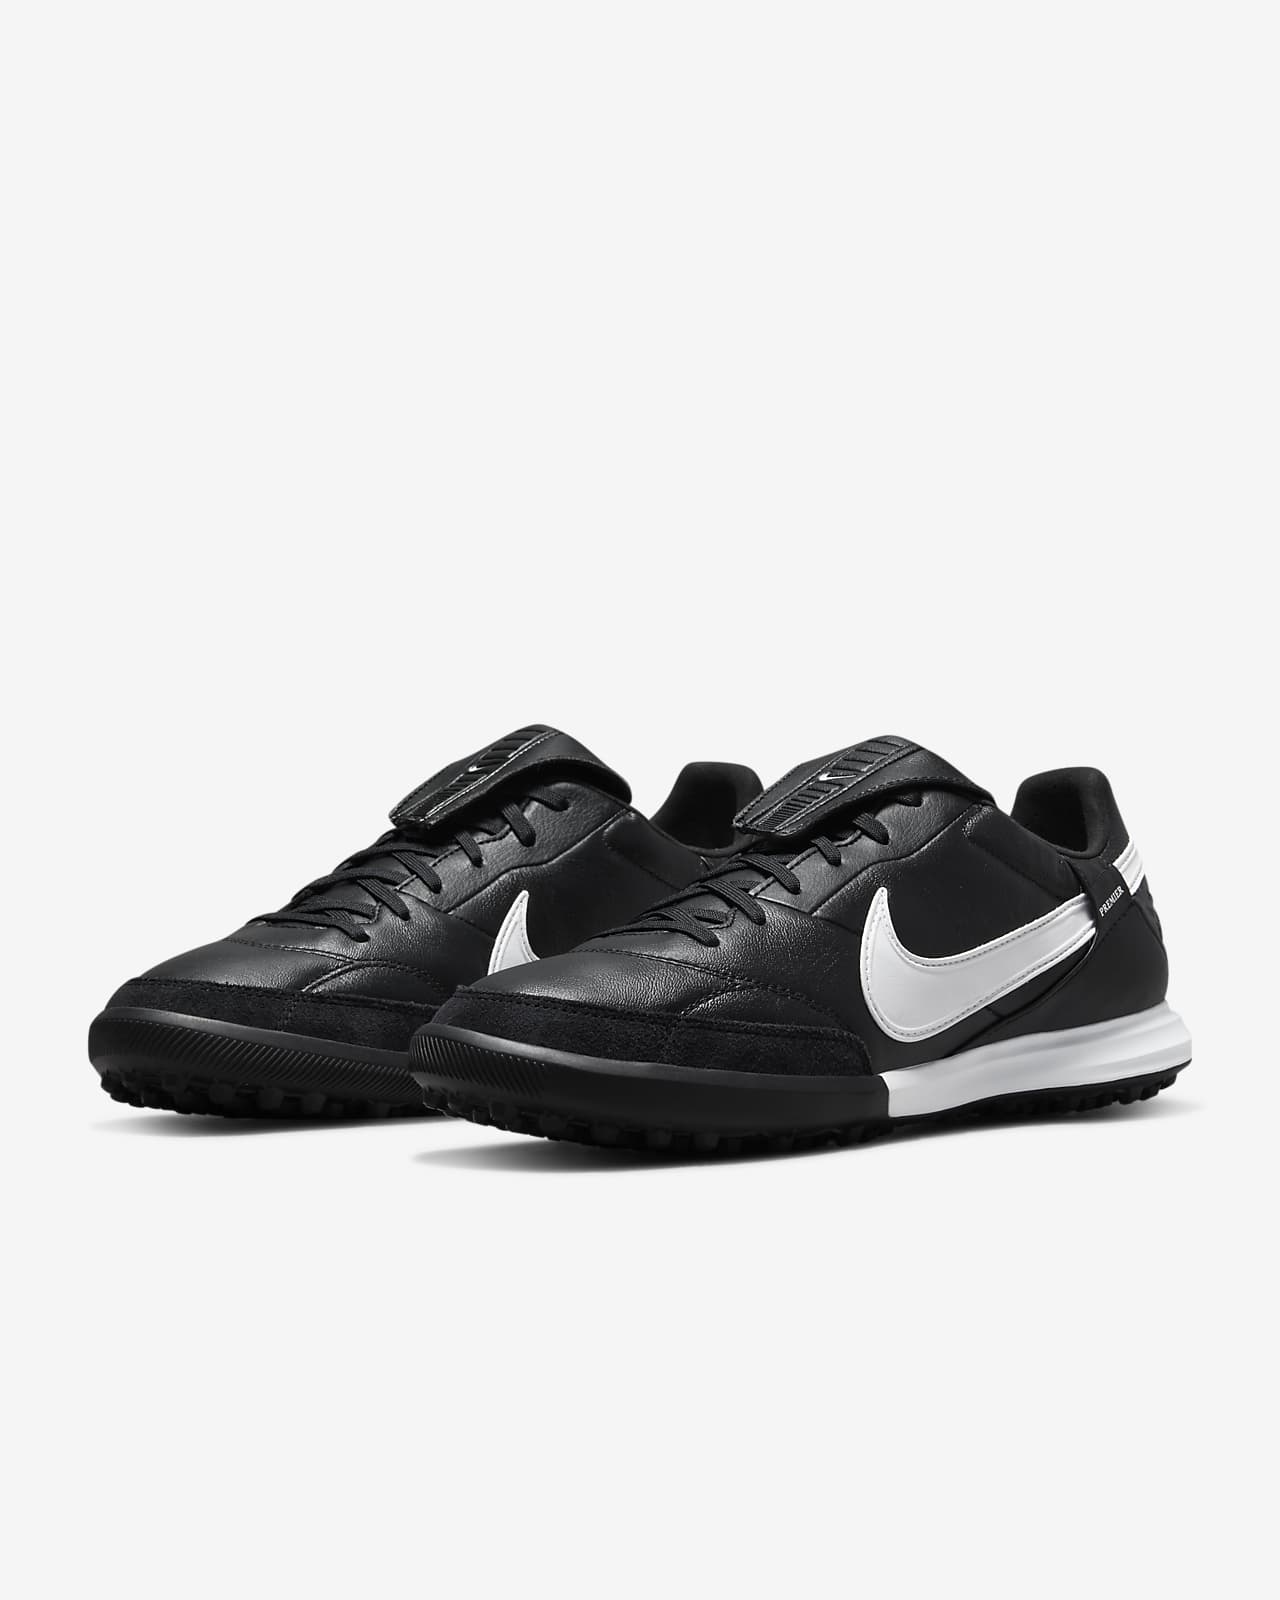 Nike Premier III Turf Soccer Shoes - Black 8